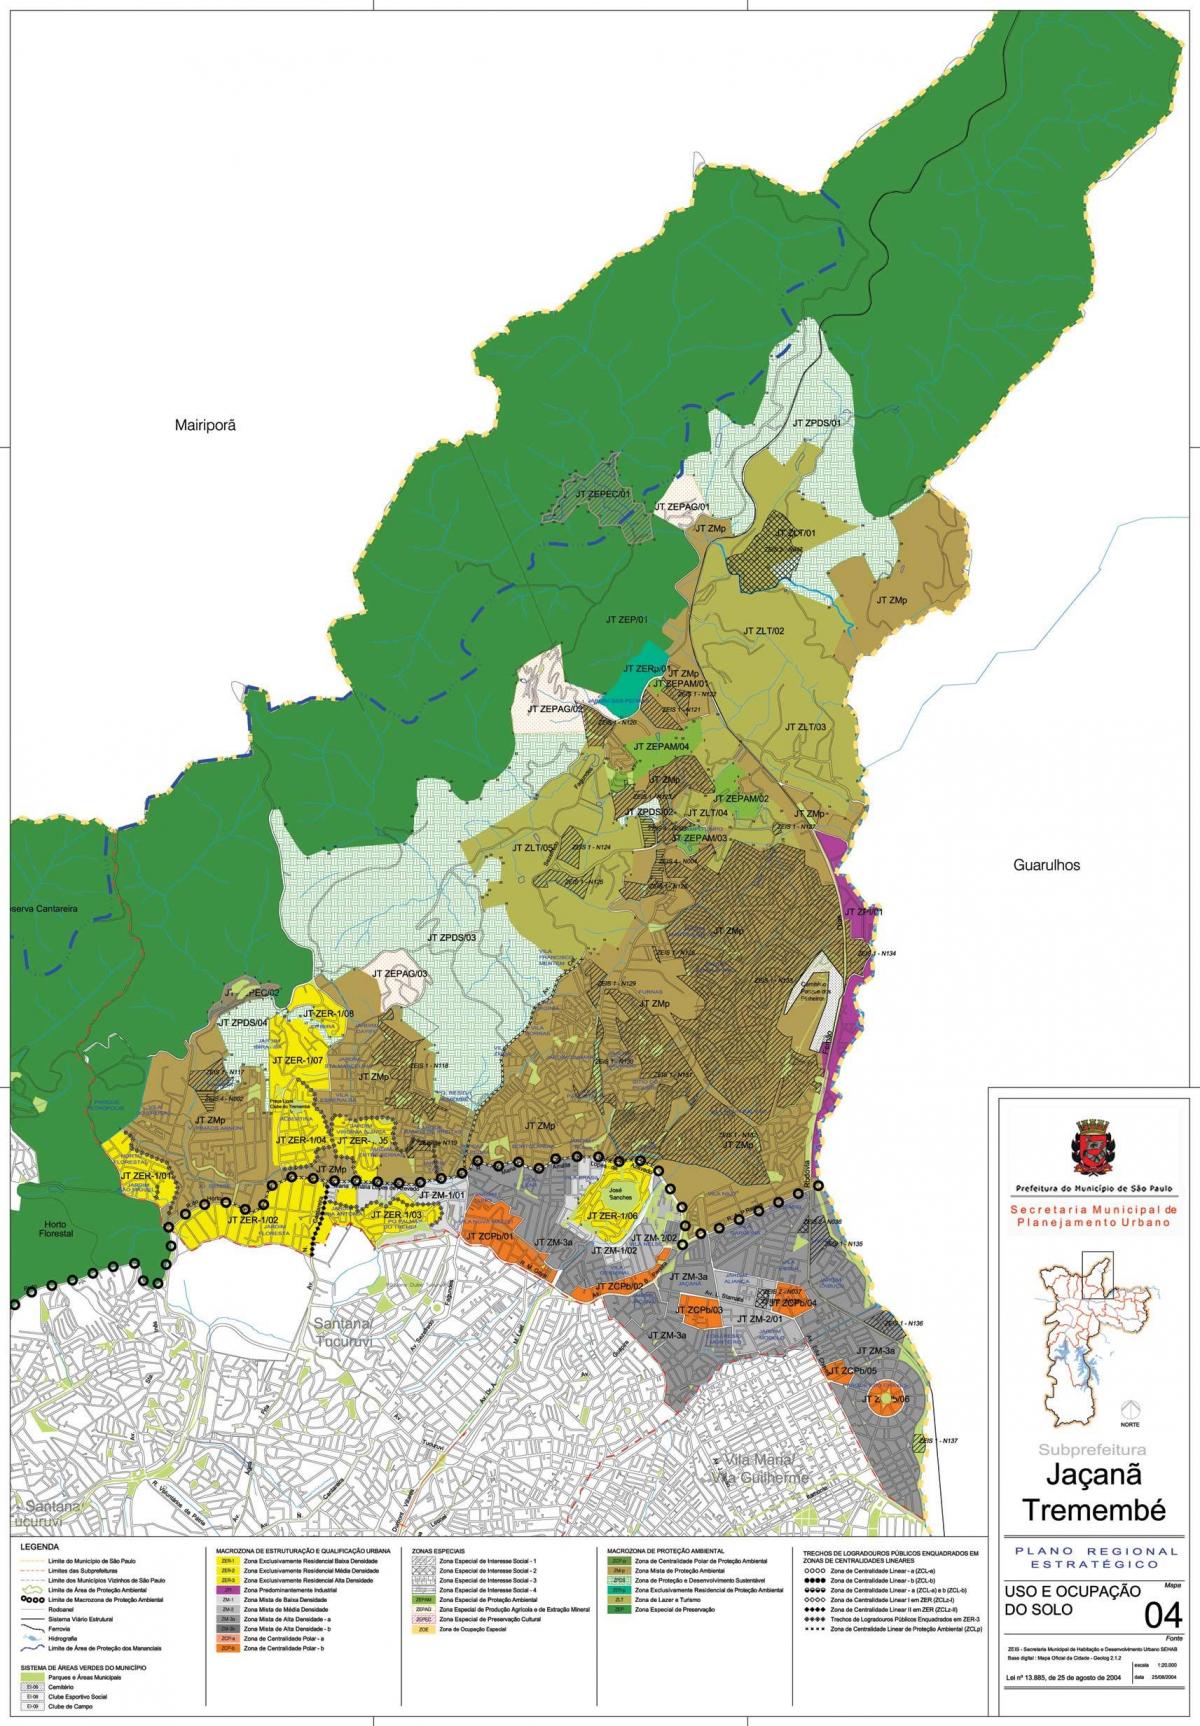 Mapa de Jaçanã-Tremembé São Paulo - Ocupación do solo